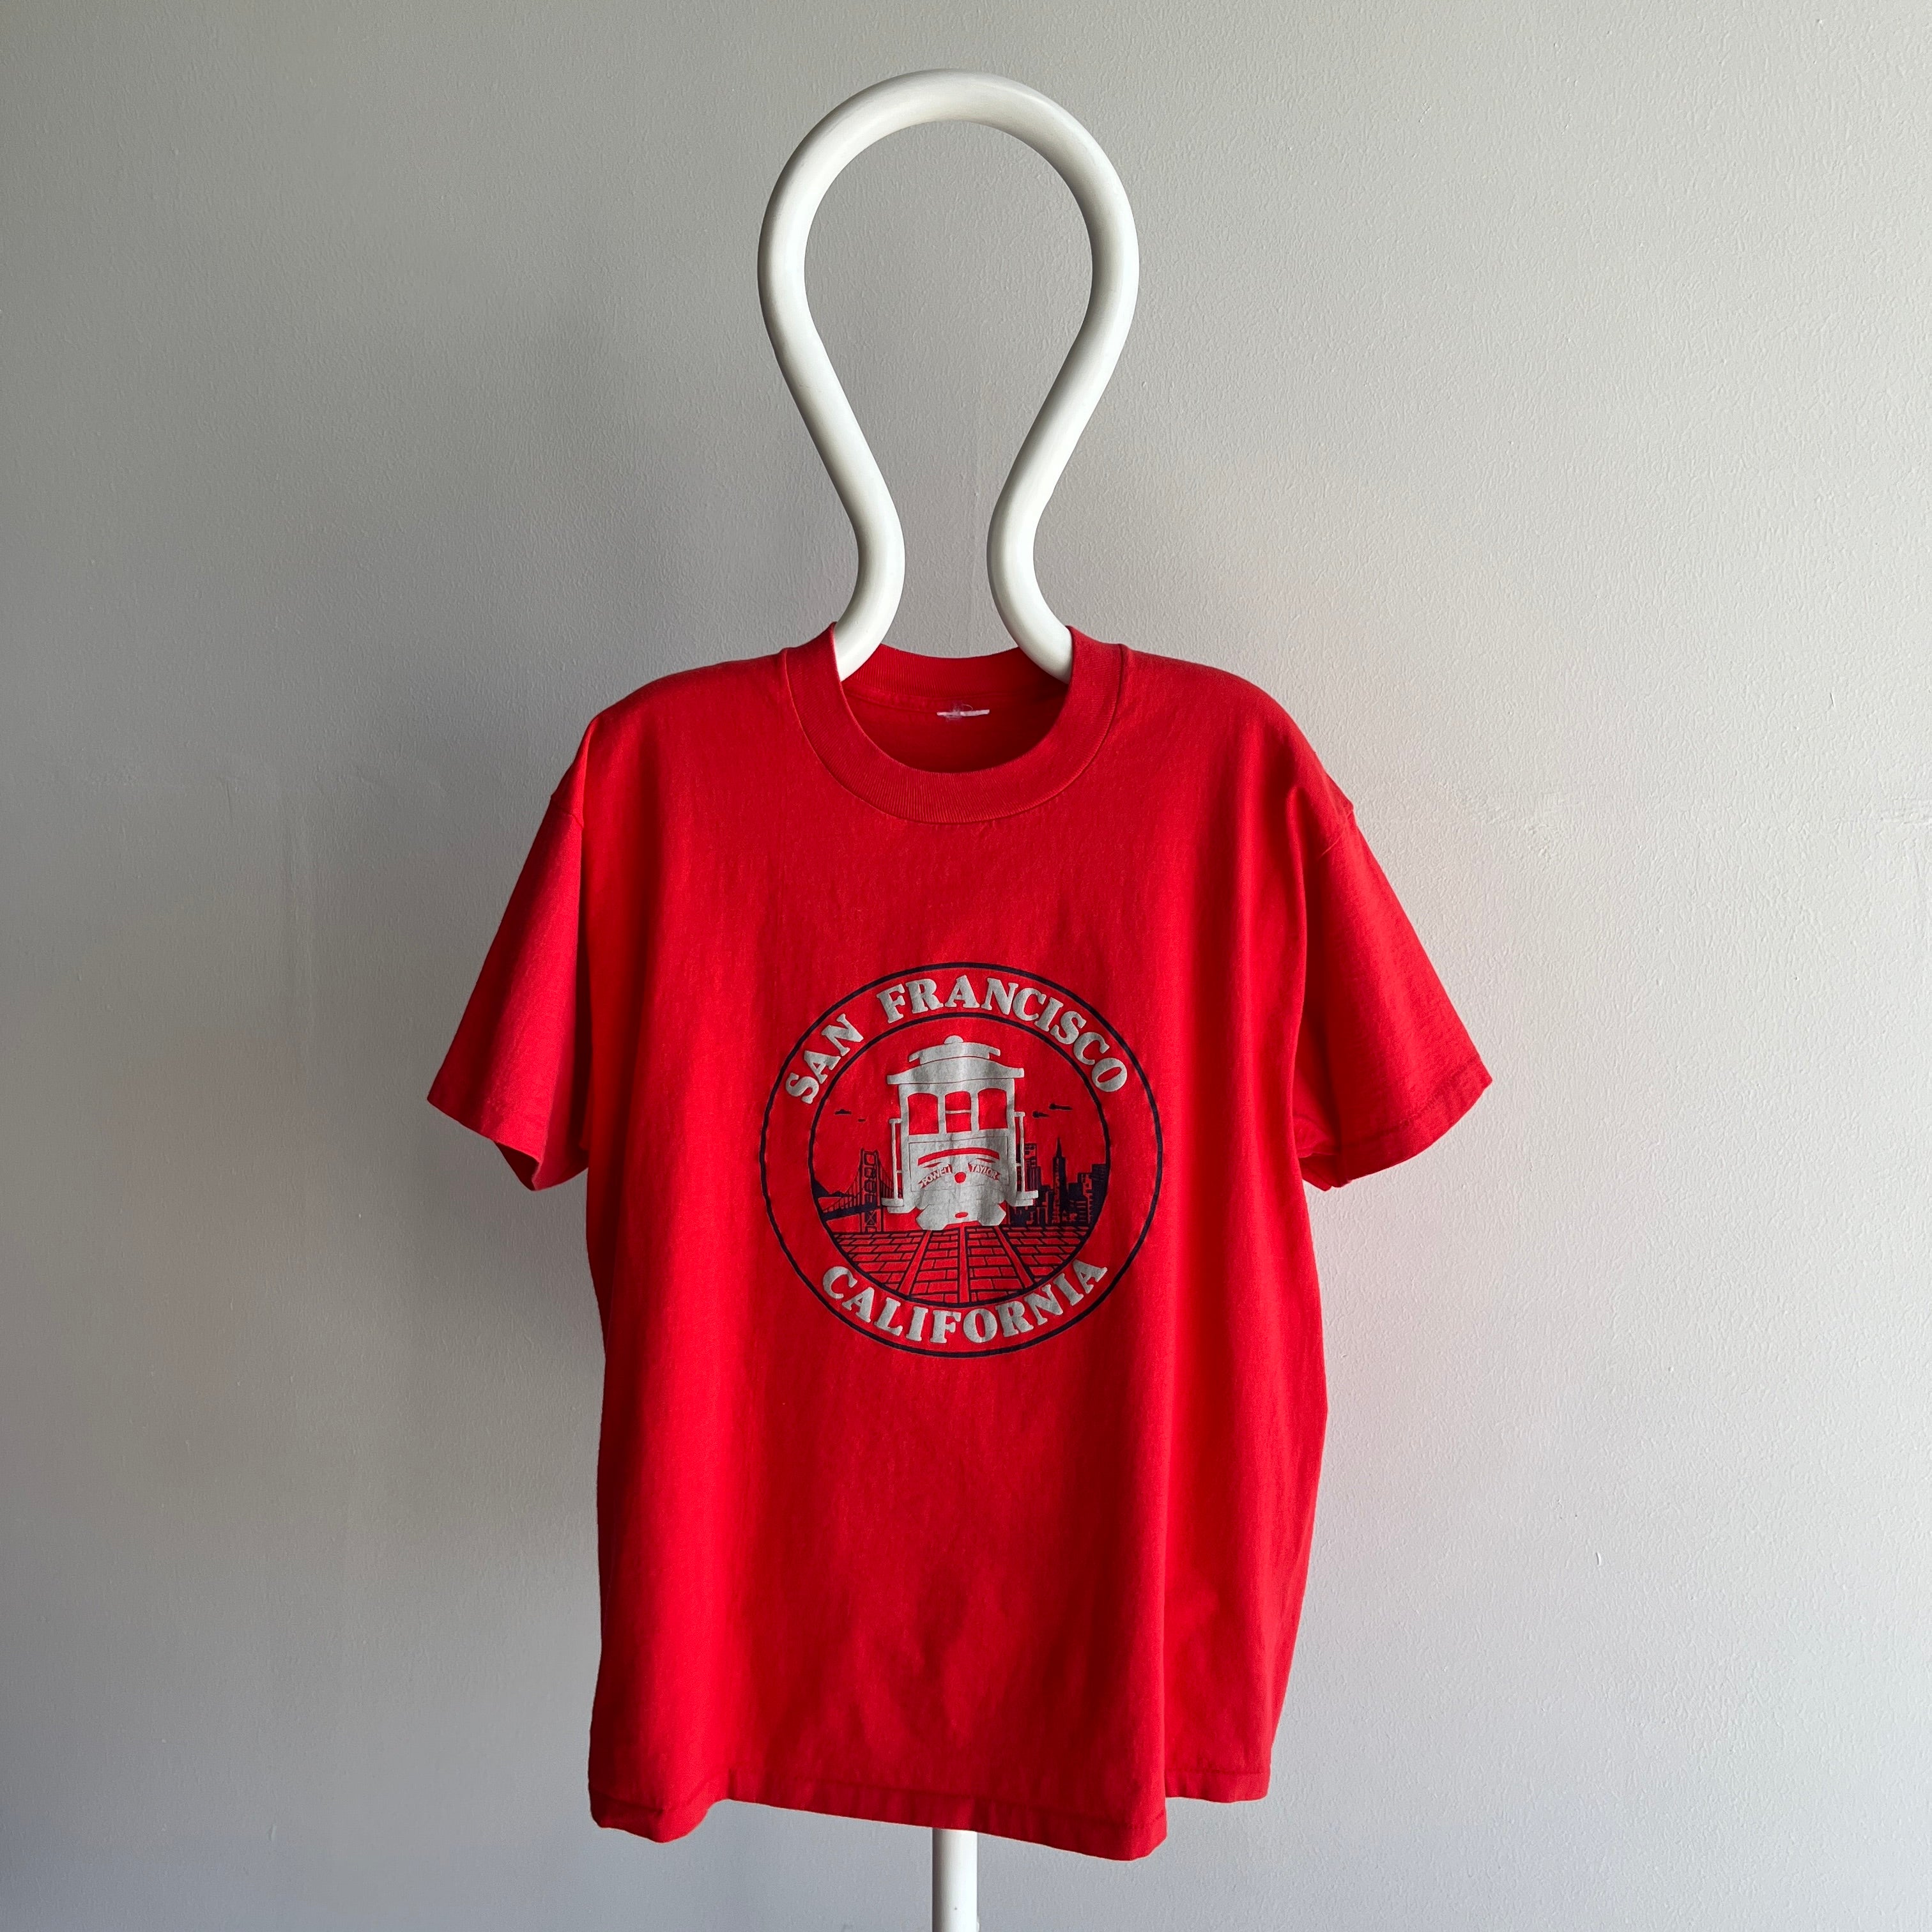 1990s San Francisco Tourist T-Shirt